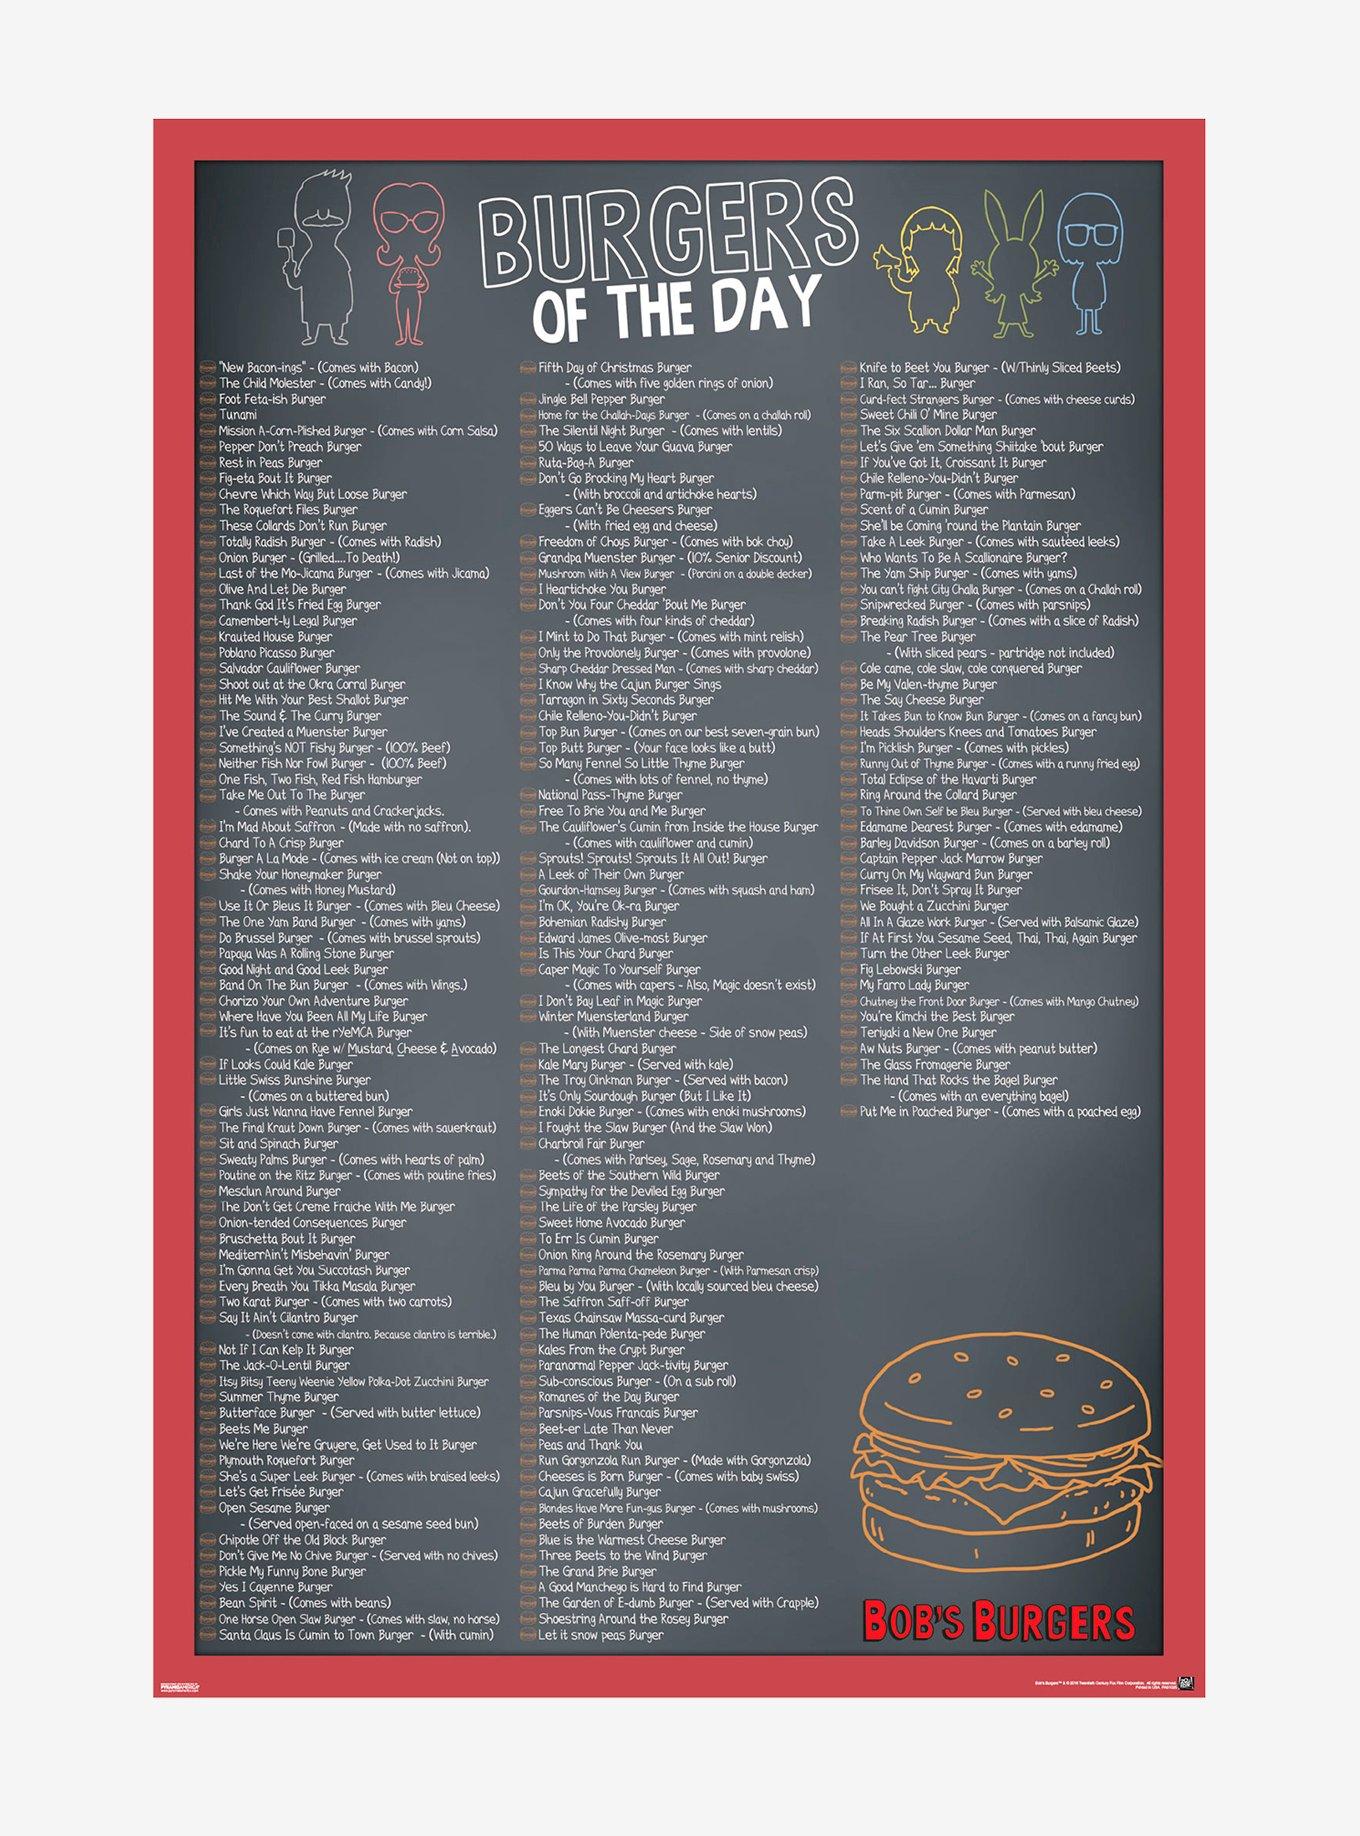 Bob's Burgers Burgers Of The Day Poster, , hi-res